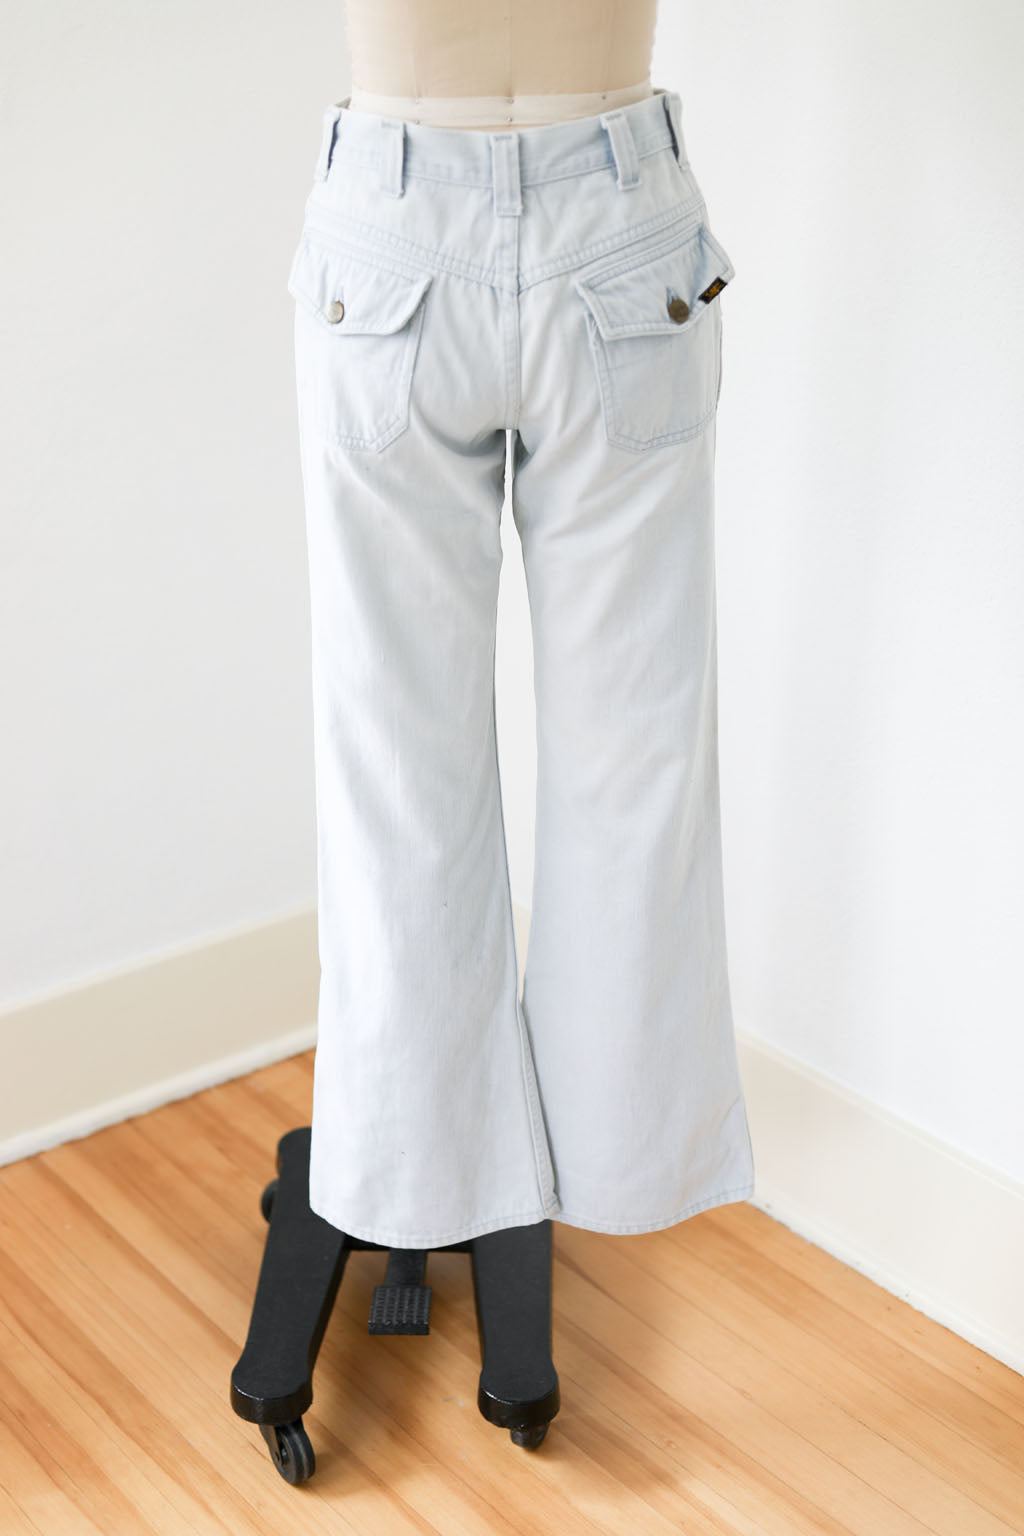 Vintage 1970s LEE Denim Bell Bottom Jeans - Light Wash Bleach Fade Talon Zipper Beauties Size W28"